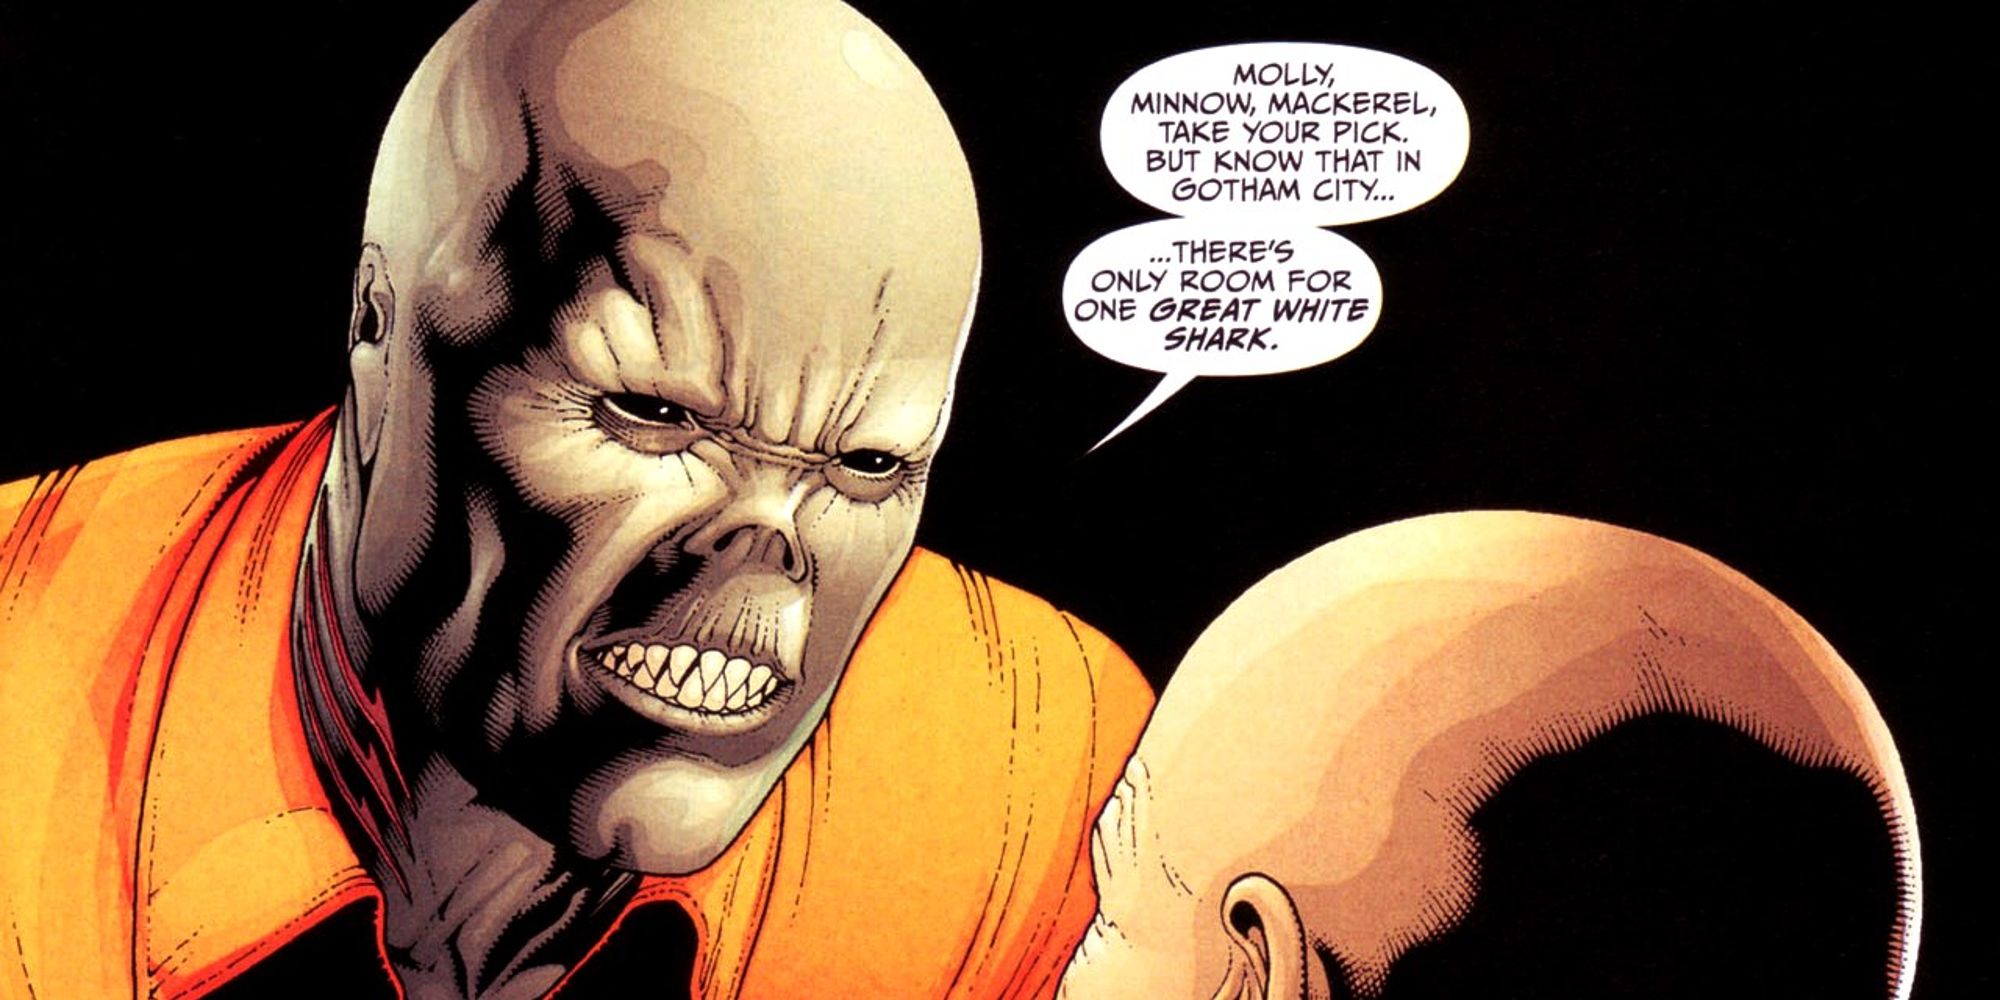 The Great White Shark threatening another prisoner in Batman comics